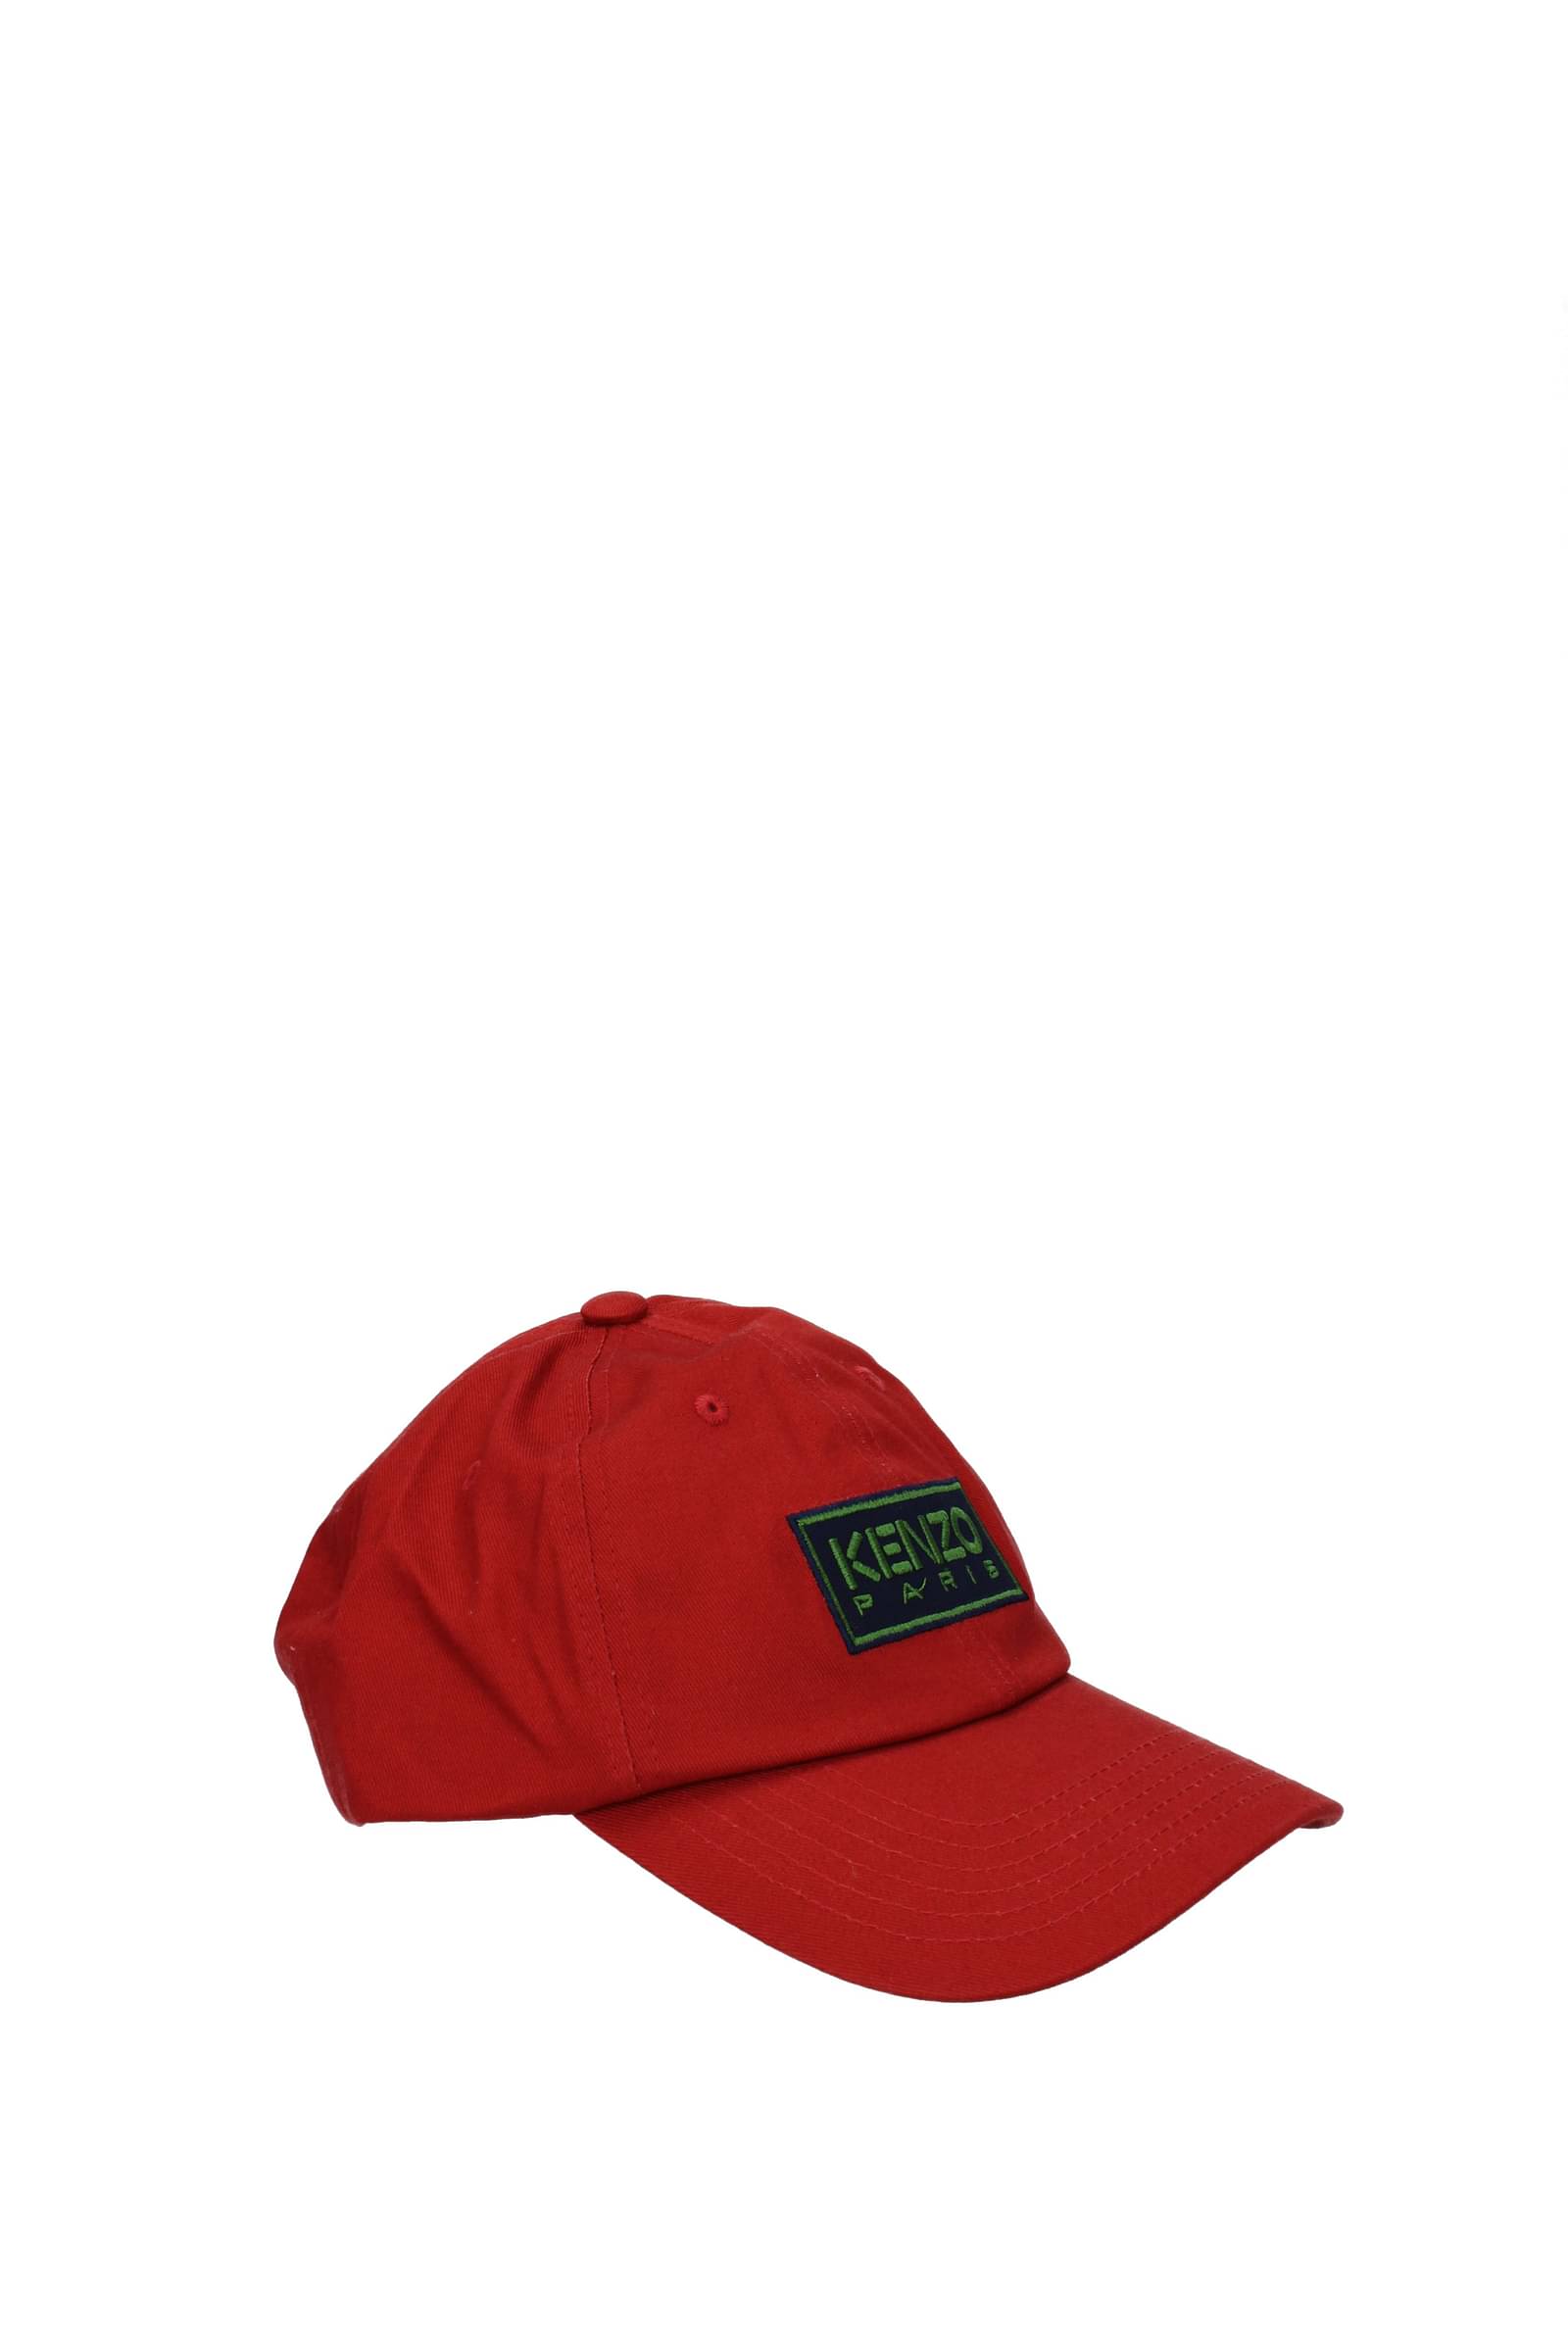 Kenzo 帽子男士5AC911F3221 棉花红色暗红色66€